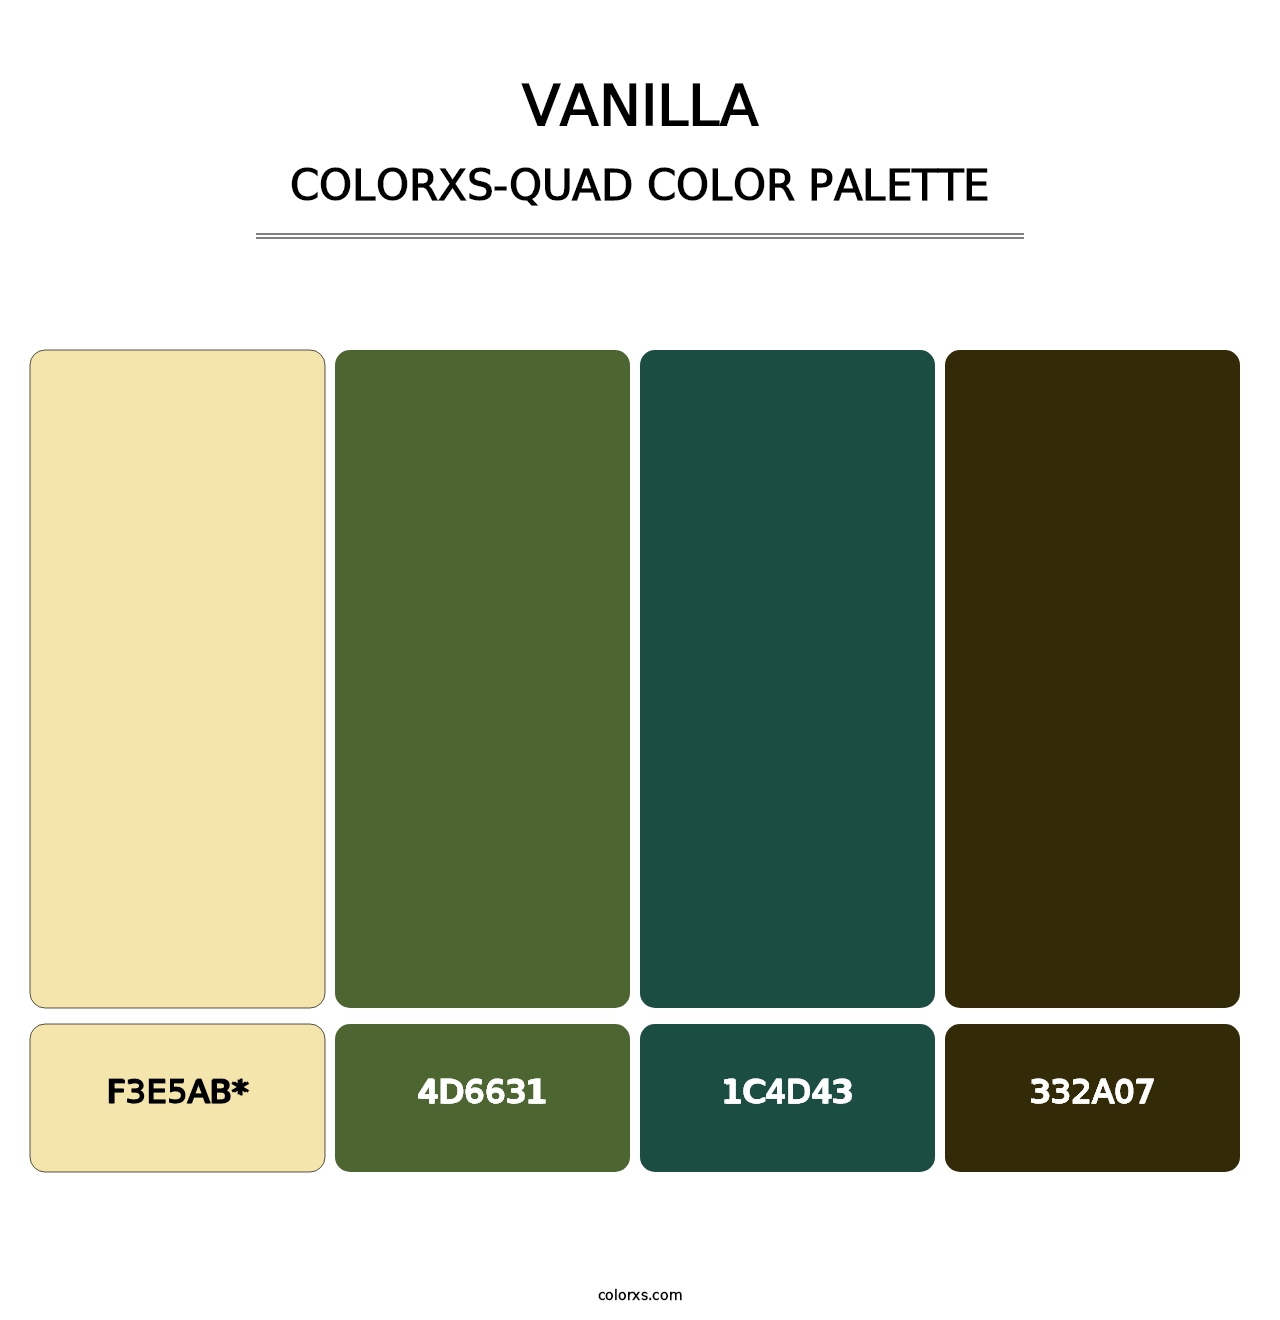 Vanilla - Colorxs Quad Palette